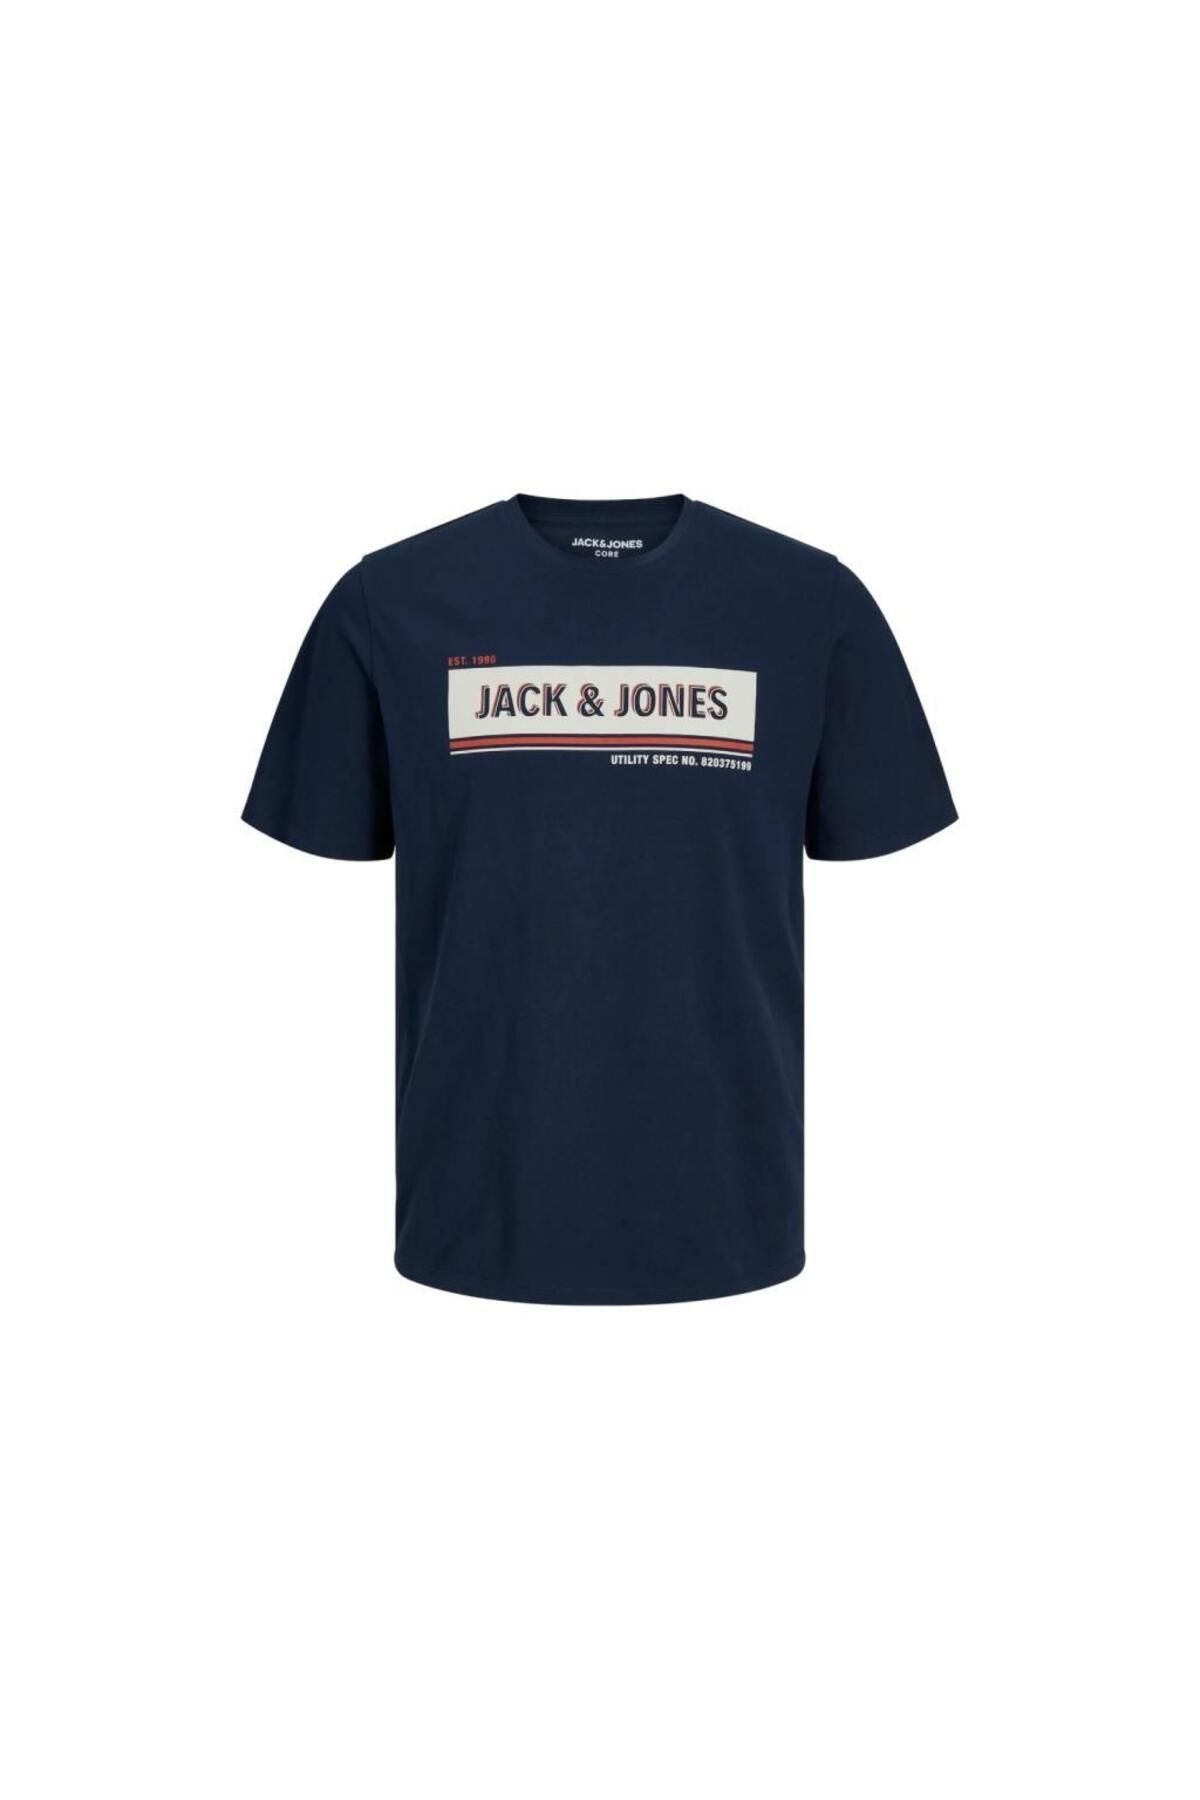 Jack & Jones 12232323 Tişört Lacivert